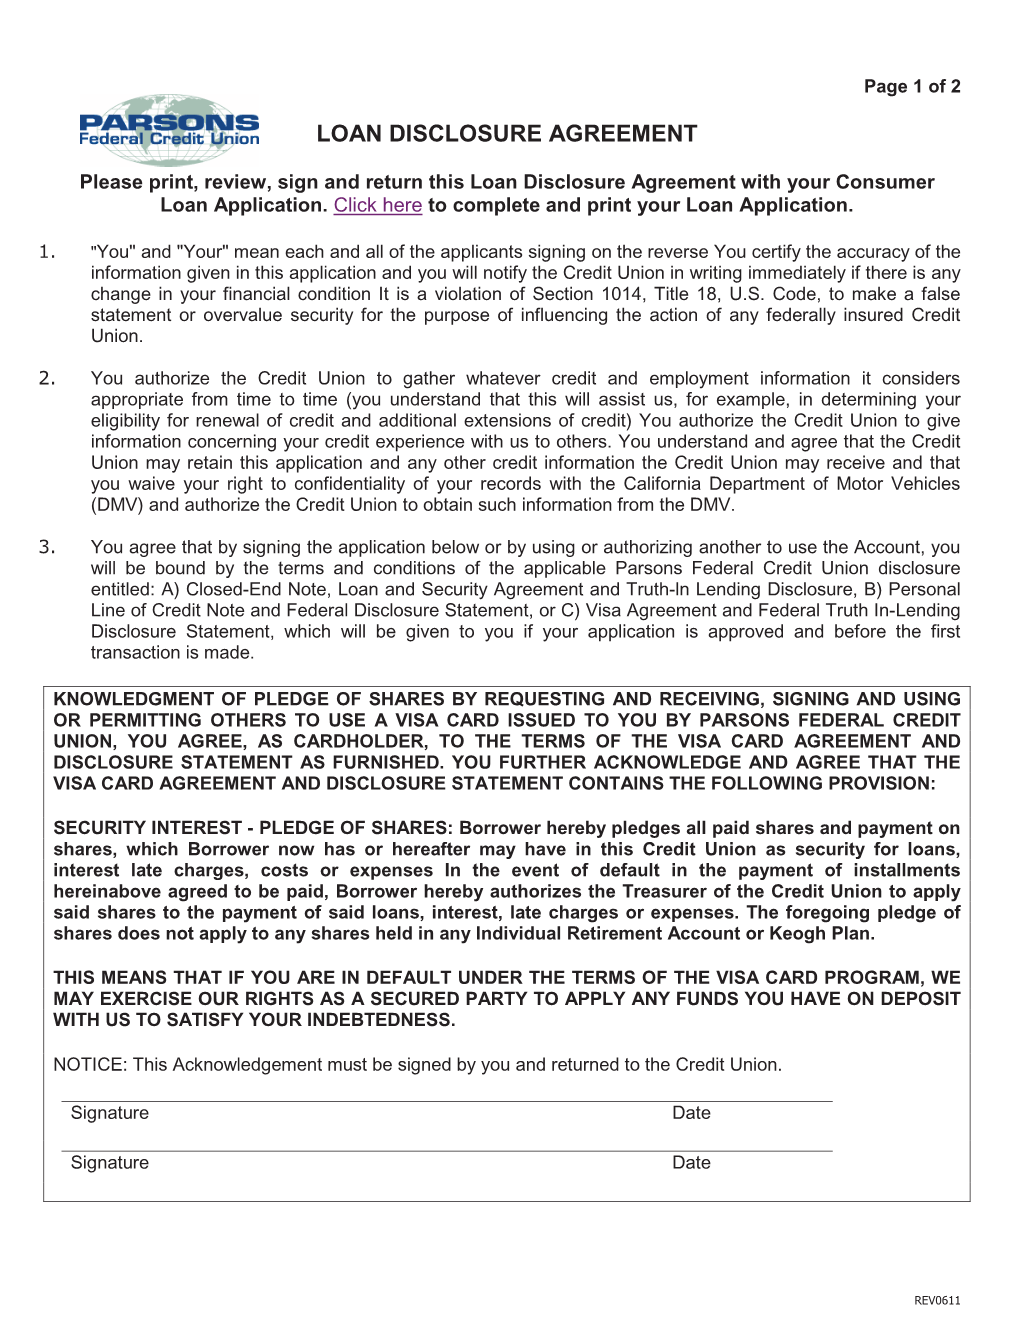 Loan Disclosure Agreement